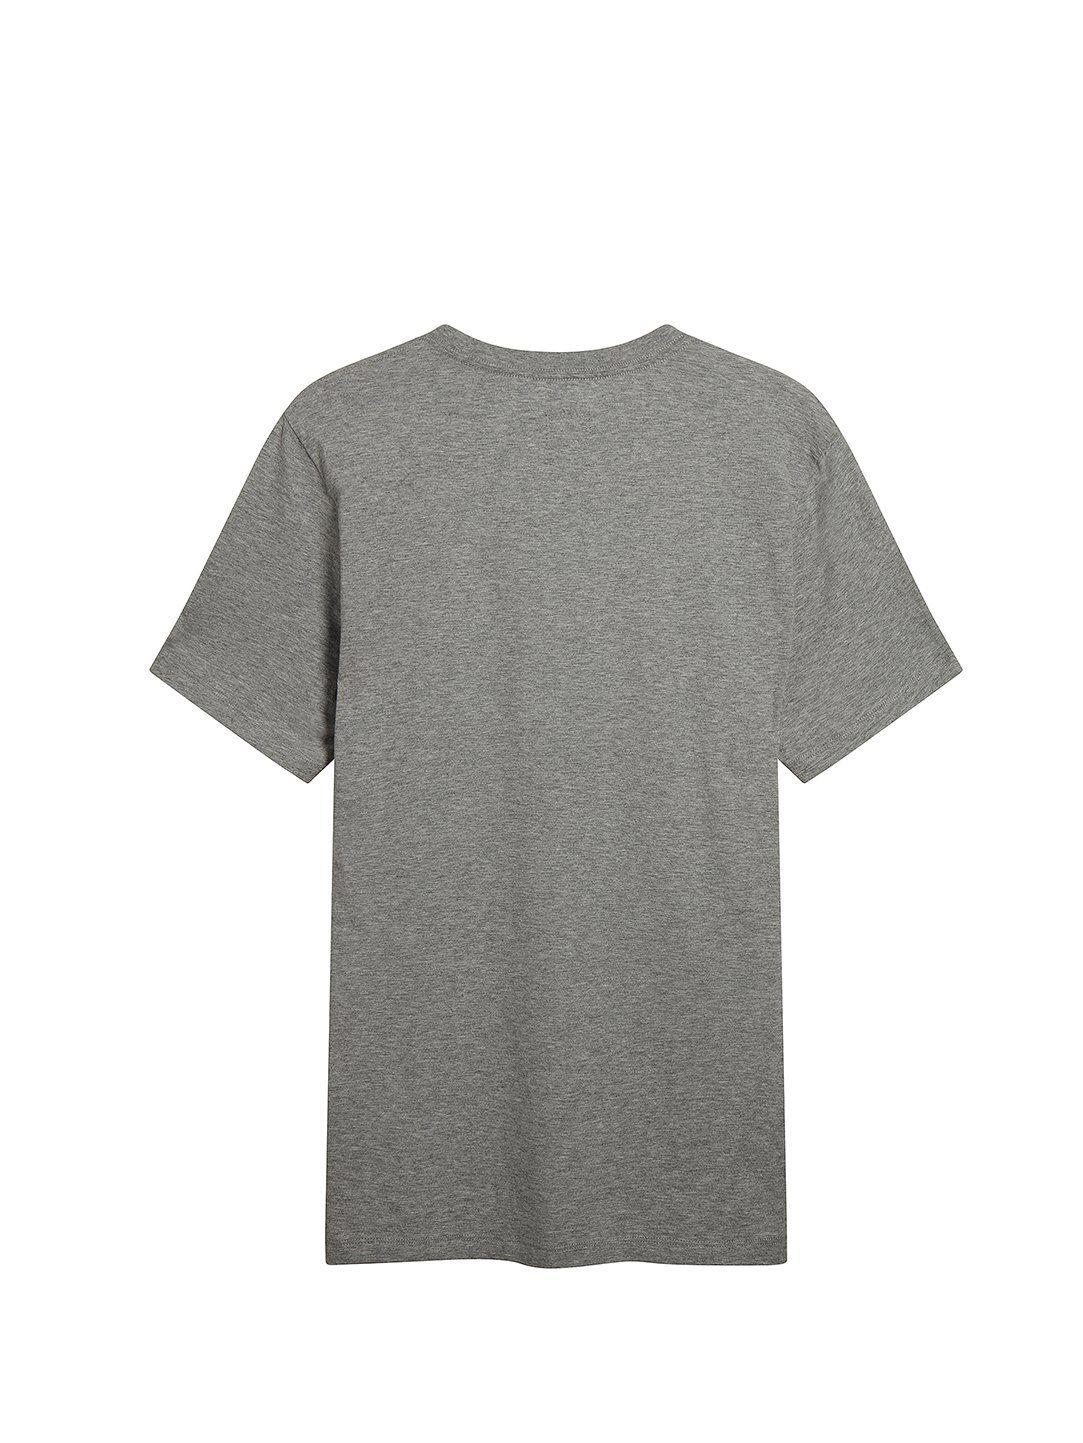 Grey Company Logo - C.P. Company. Jersey 30 1 Mini Vintage Logo Print Crew T Shirt In Grey